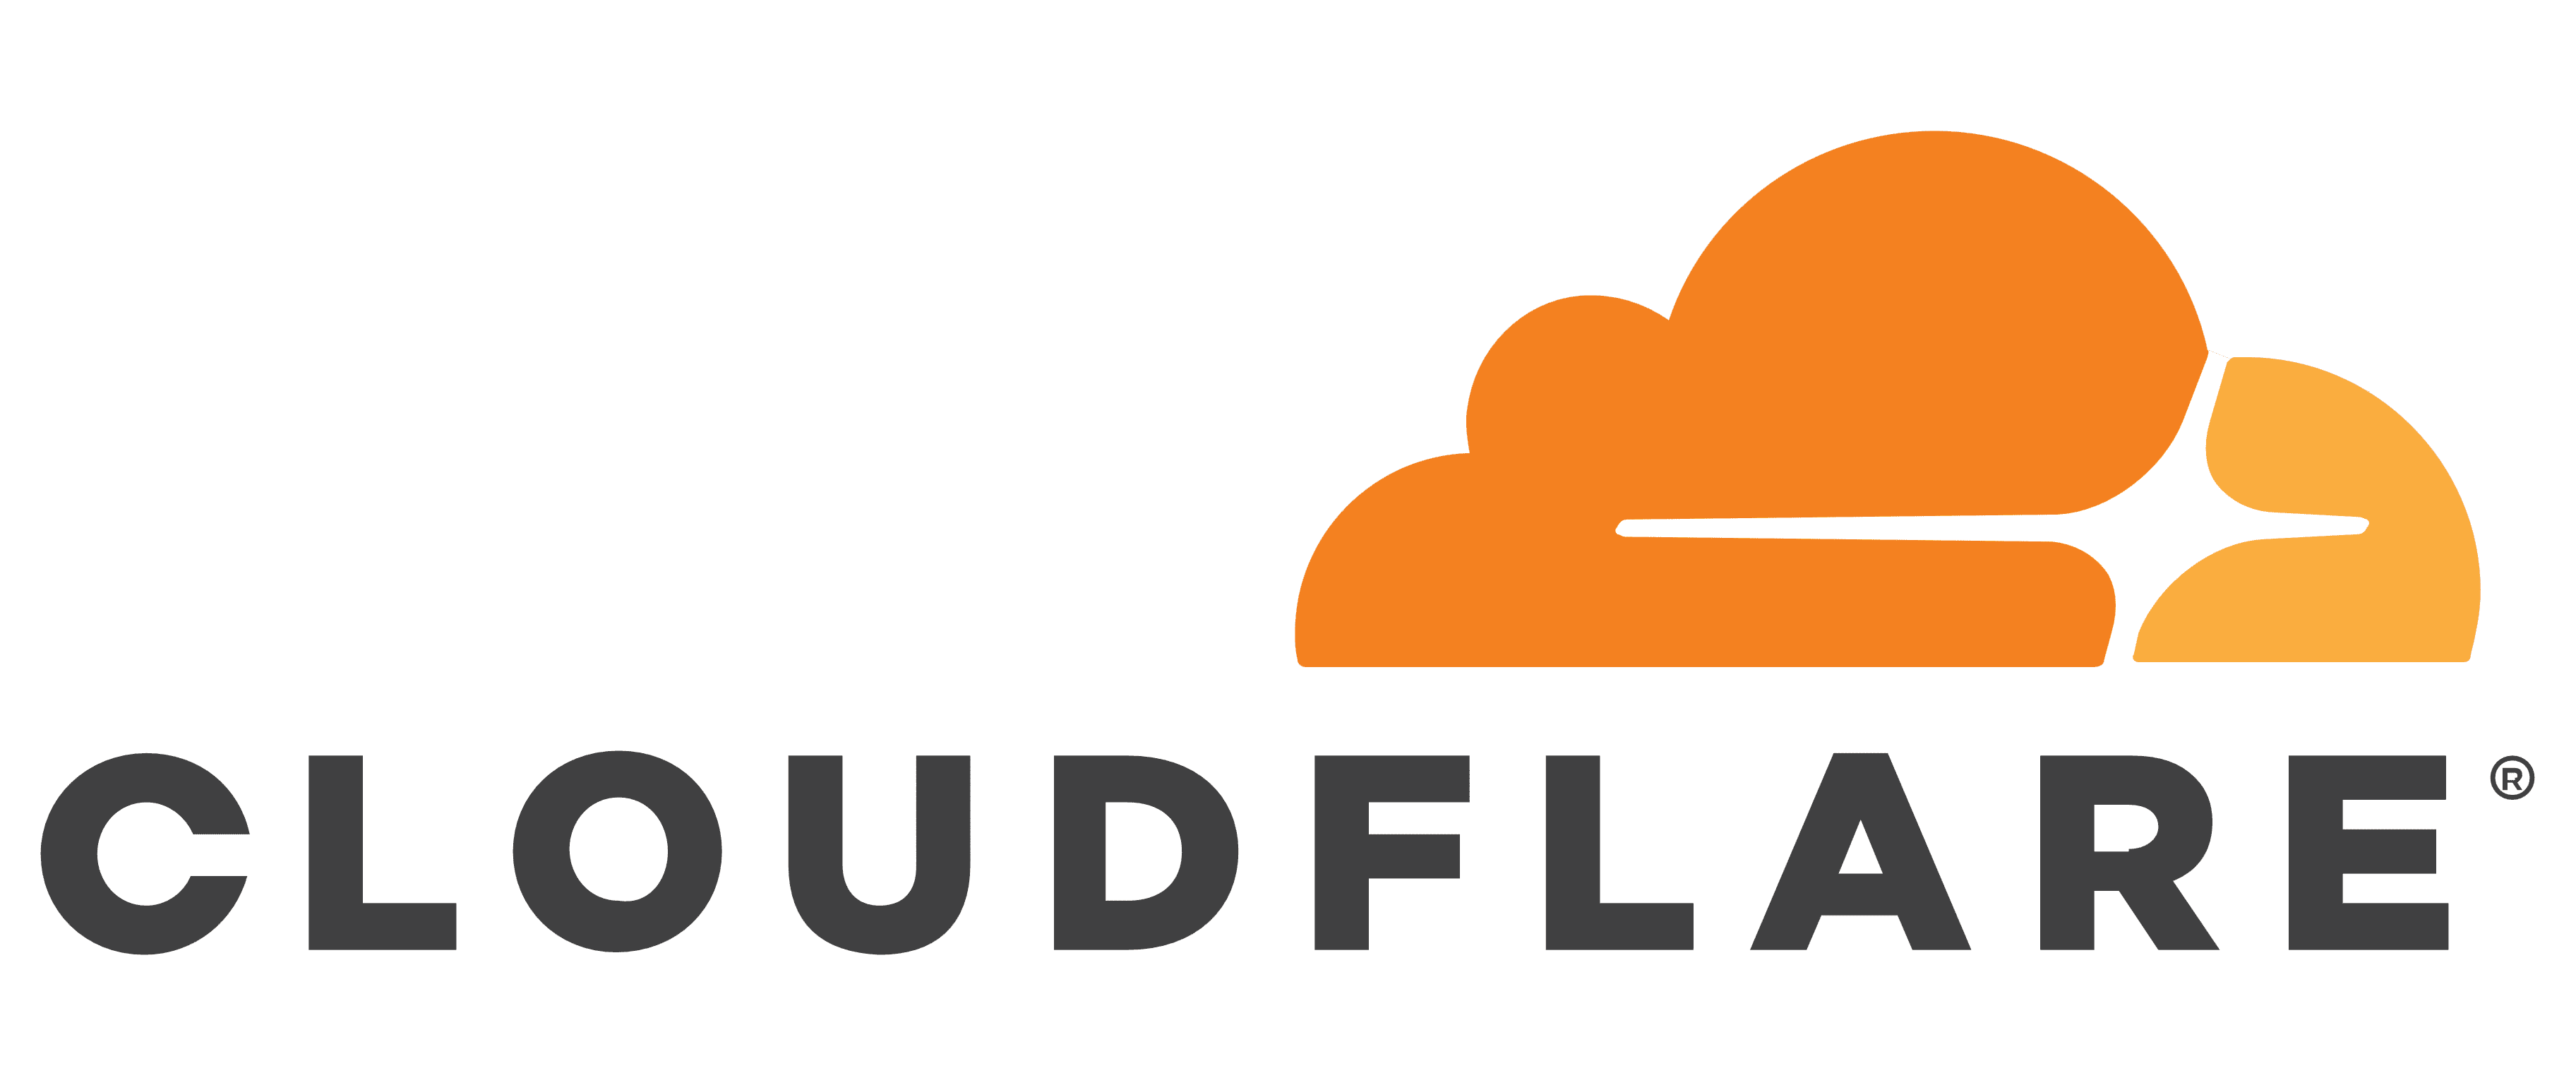 Proteger a Cloudflare com o Cloudflare One
